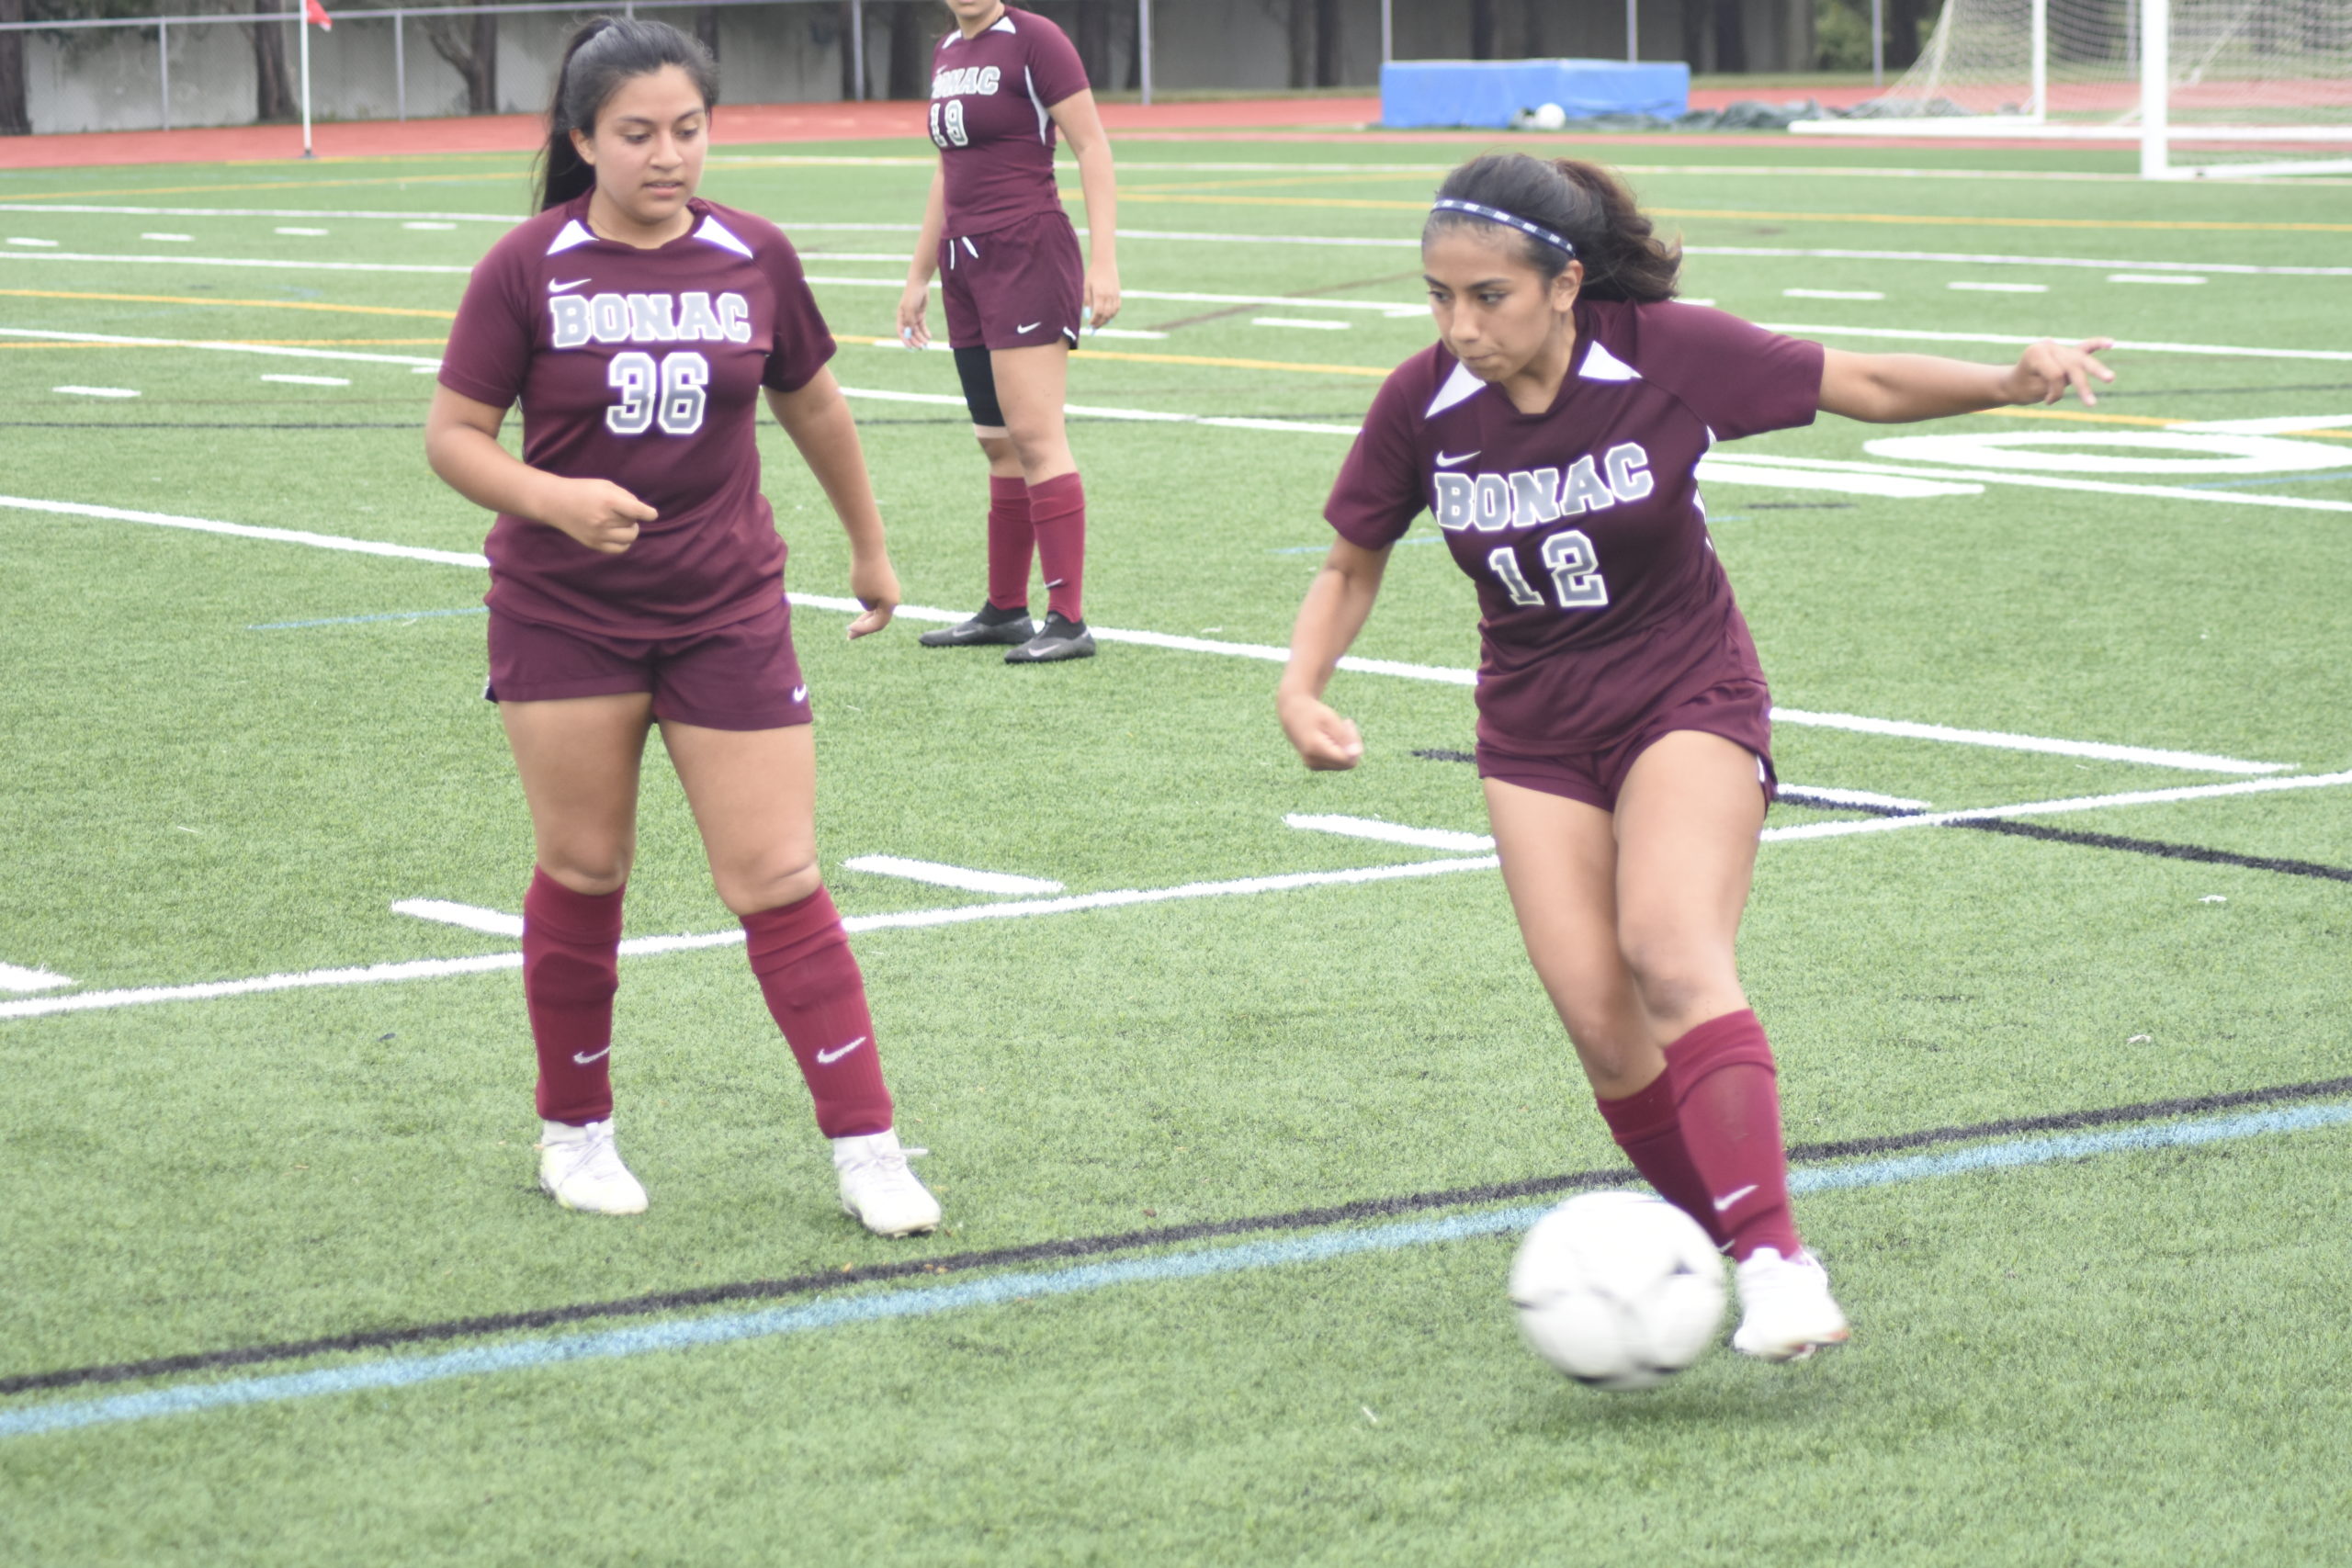 With junior Tiffany Pesantez looking on, junior Bonacker Nicole Velez plays the ball near the sideline.